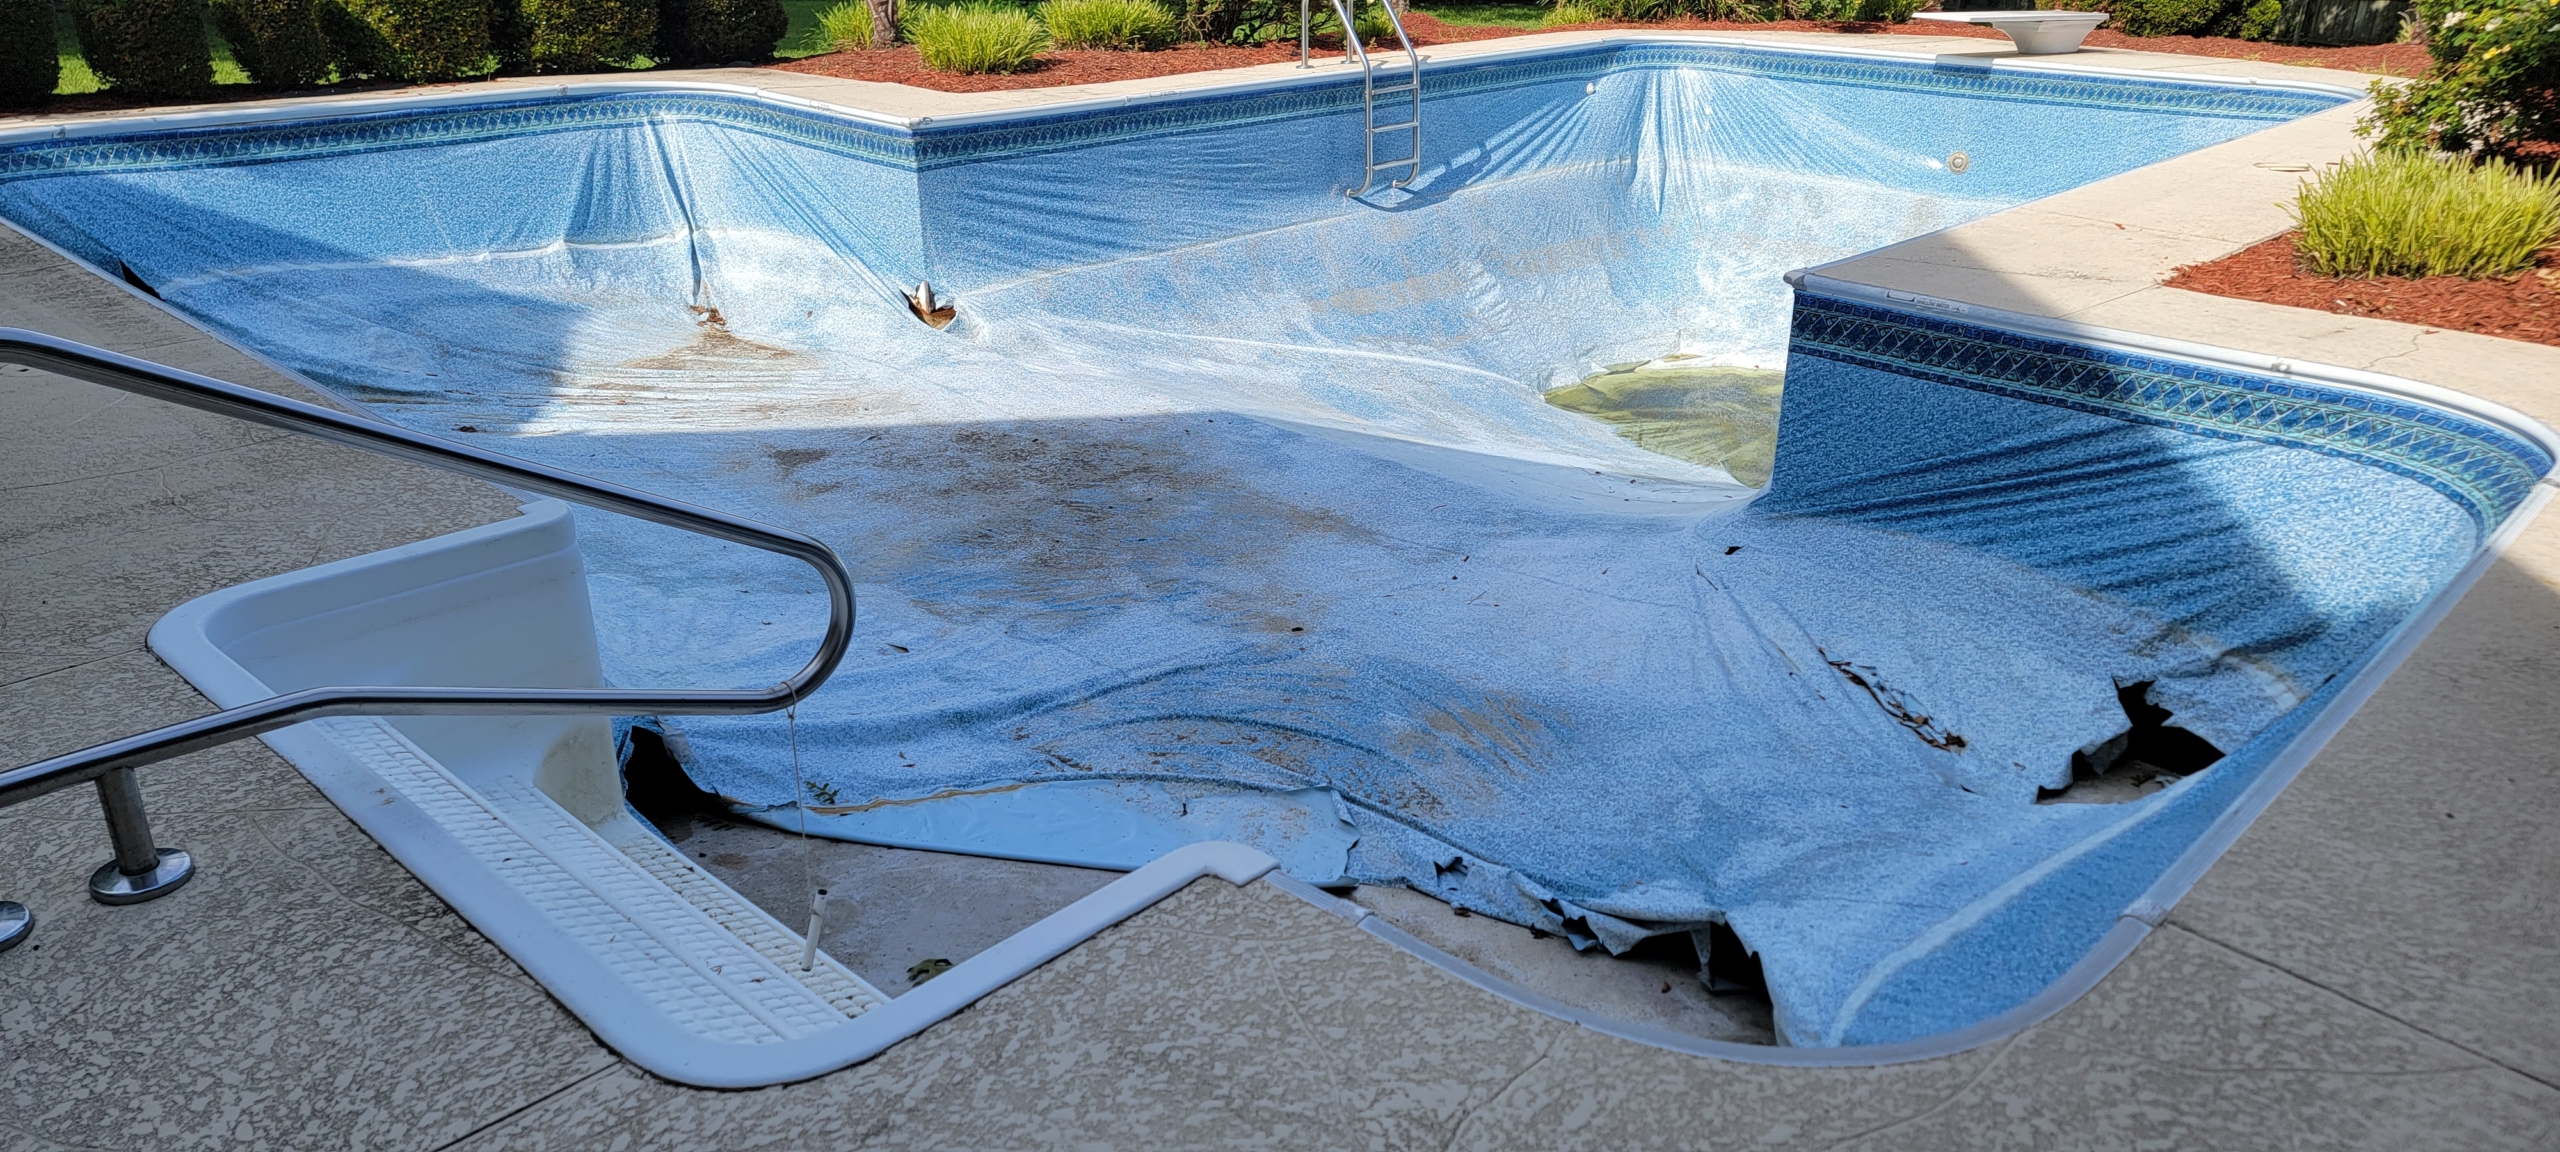 Pool Liner Installation in Hampton Roads